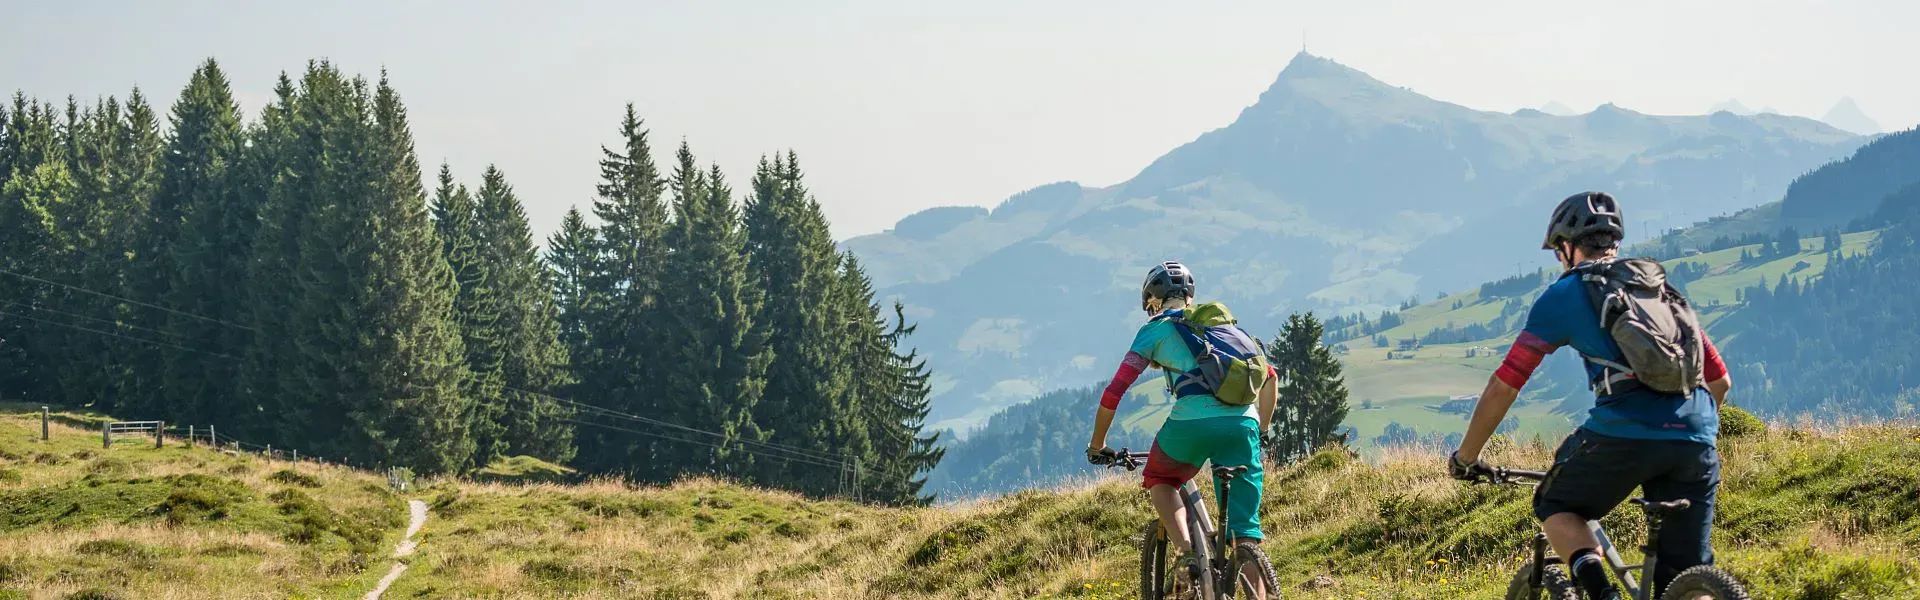 Kitzbüheler Alpen-Mountainbiker-am-Trail-c-Kurt Tropper  (10)